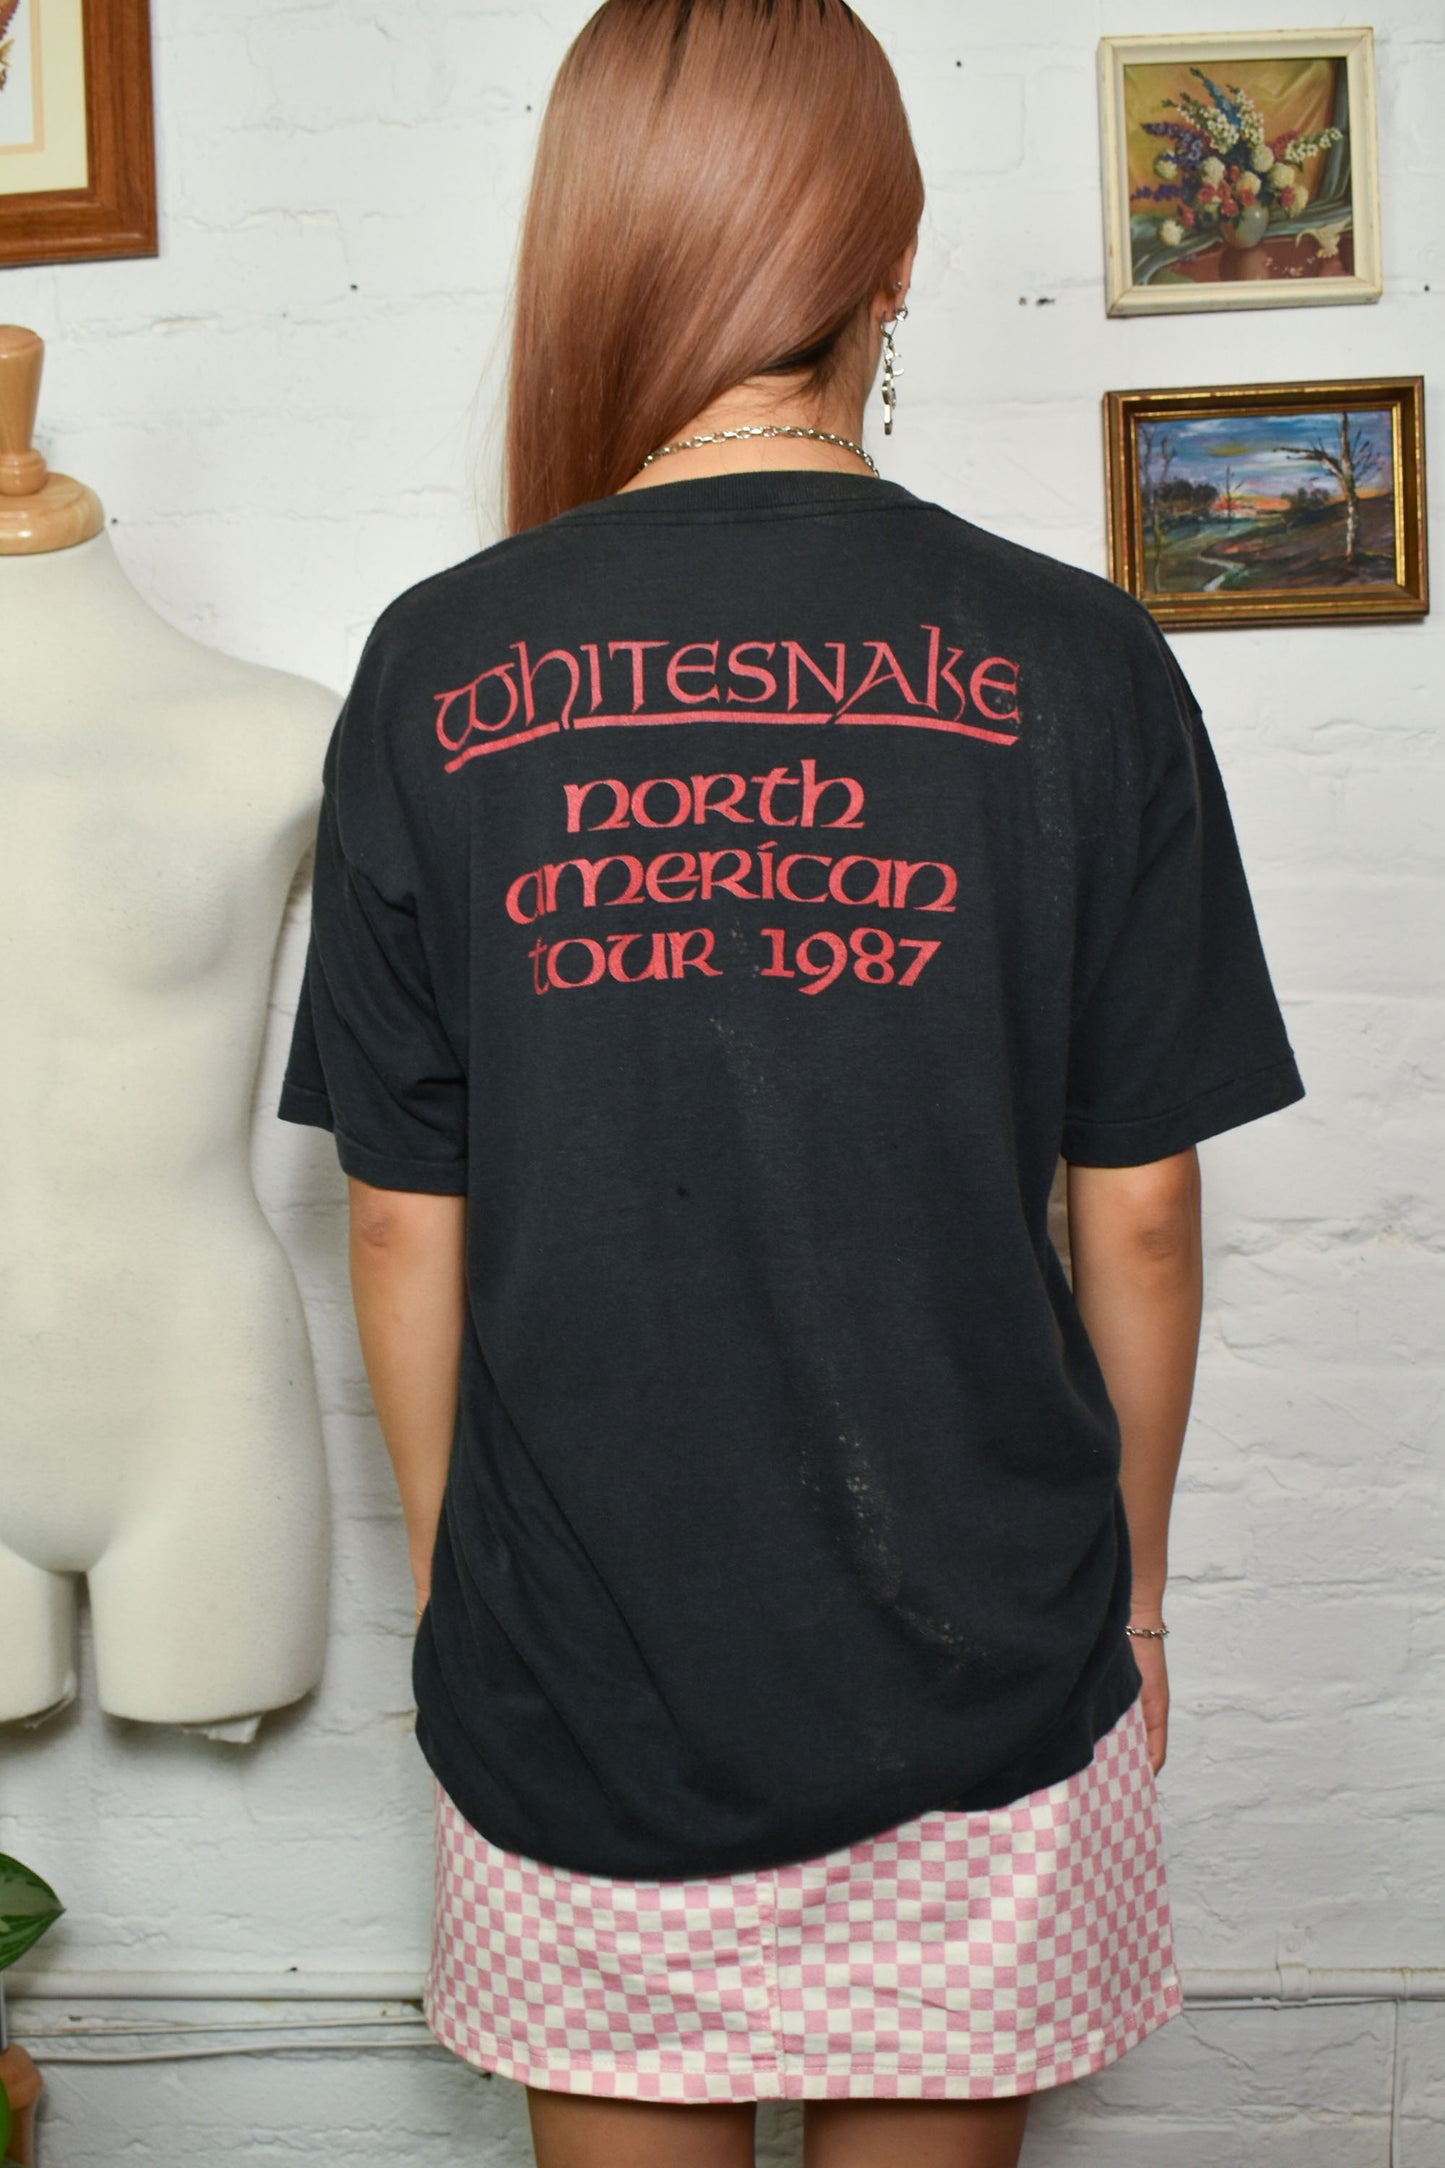 Vintage 1987 "White Snake" Tour T-Shirt